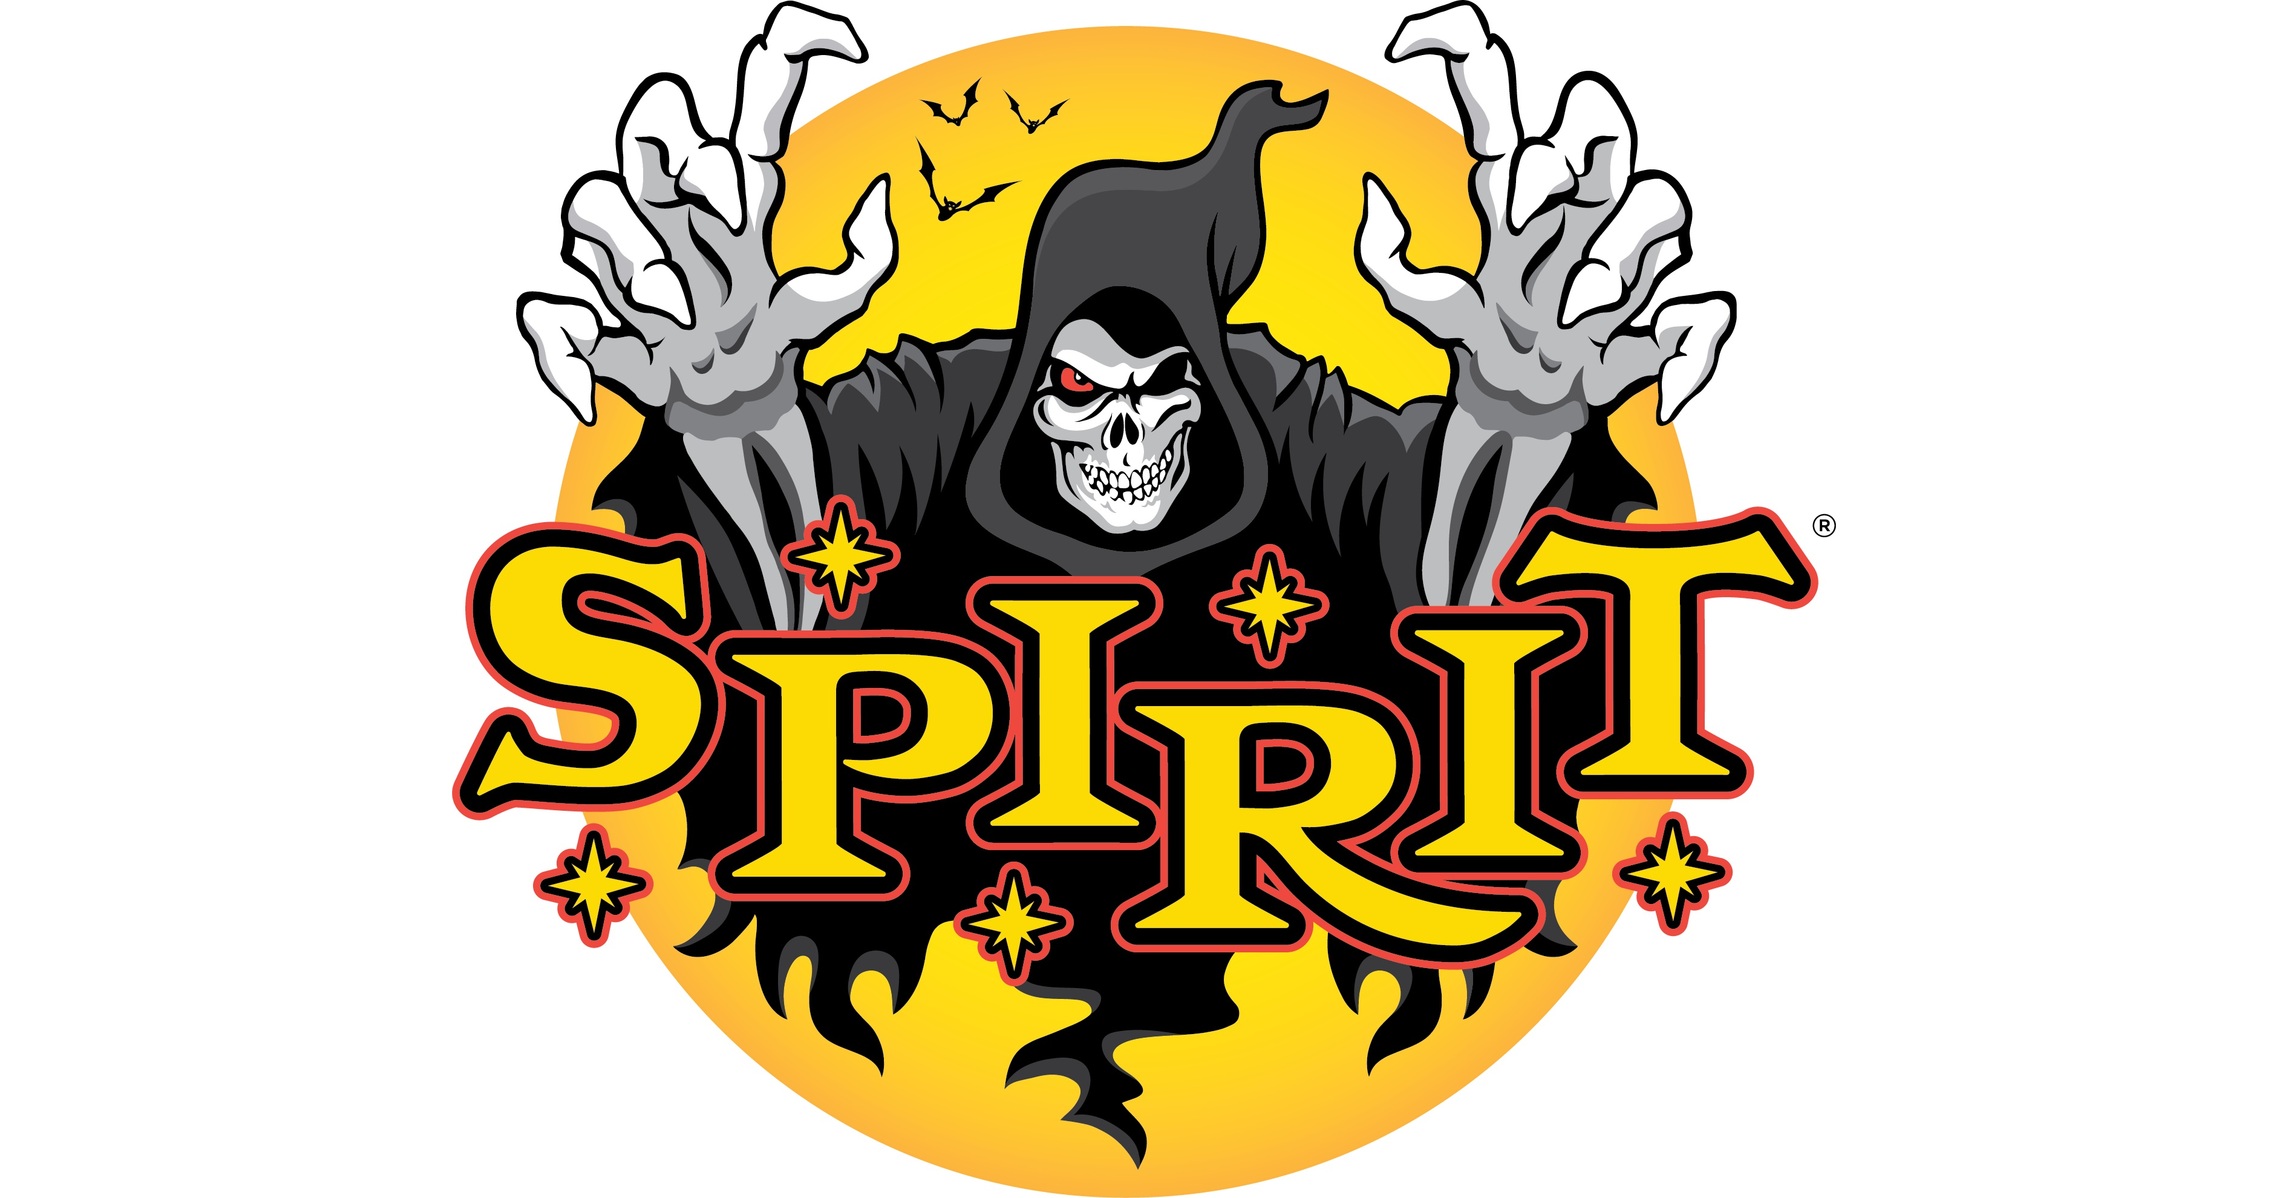 Spirit Halloween